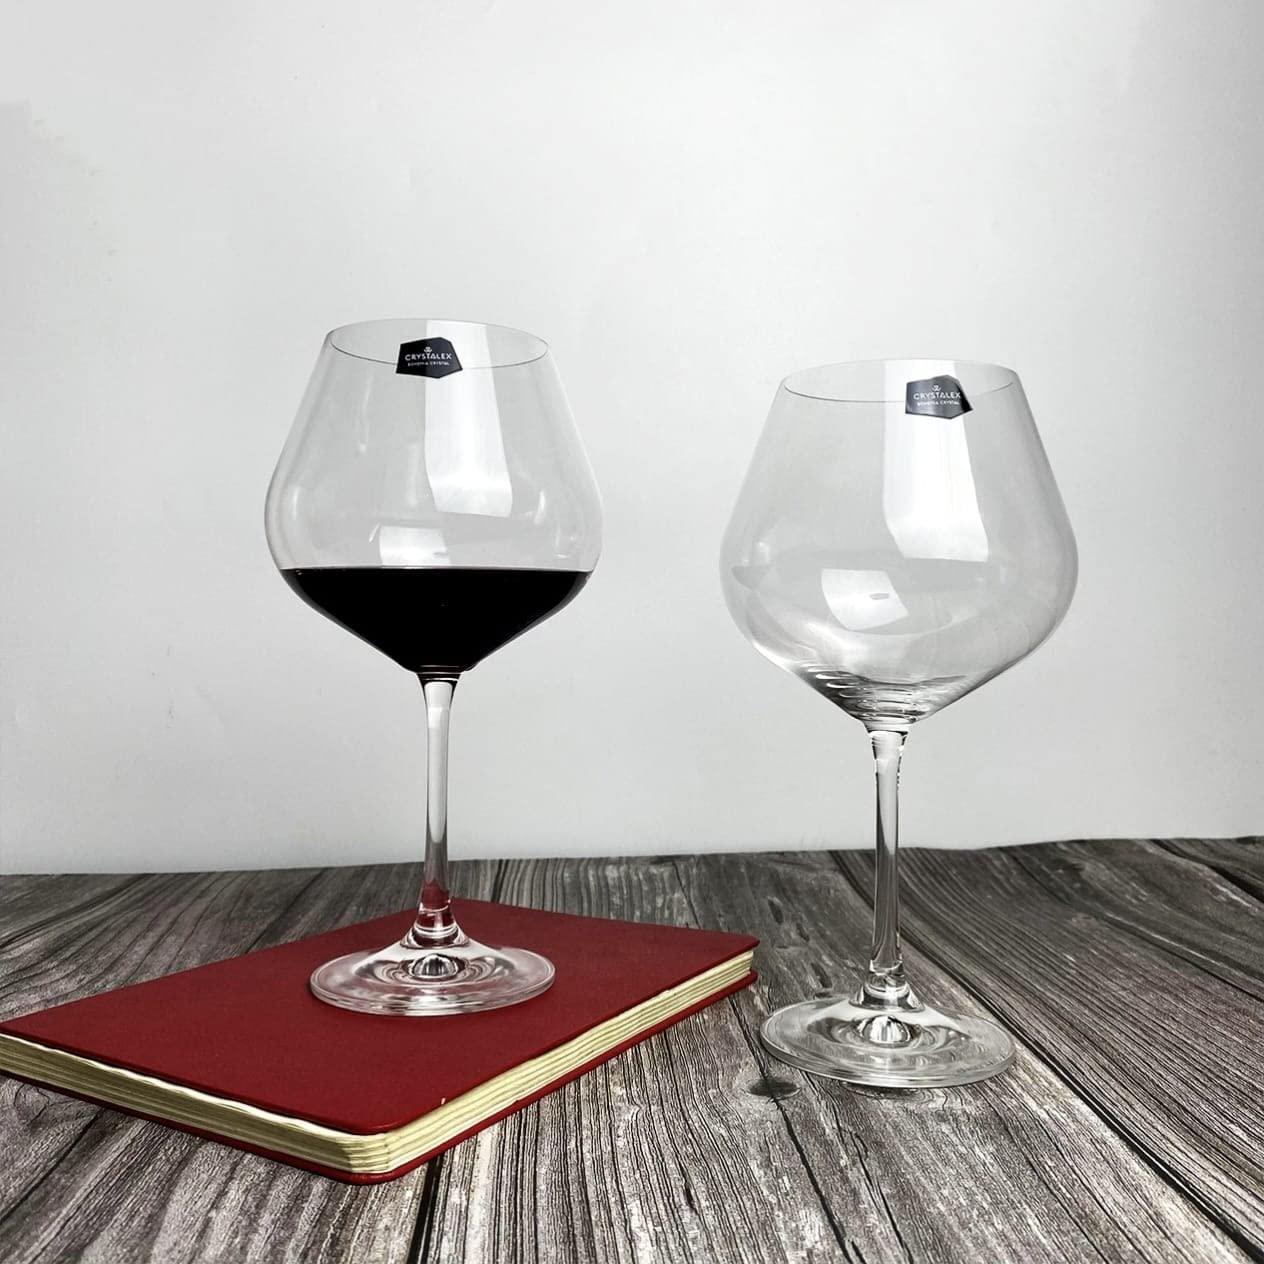 Bohemia Crystal Viola Wine Glass Set, 570ml, Set of 6pcs, Transparent, Non Lead Crystal Glass | Wine Glass